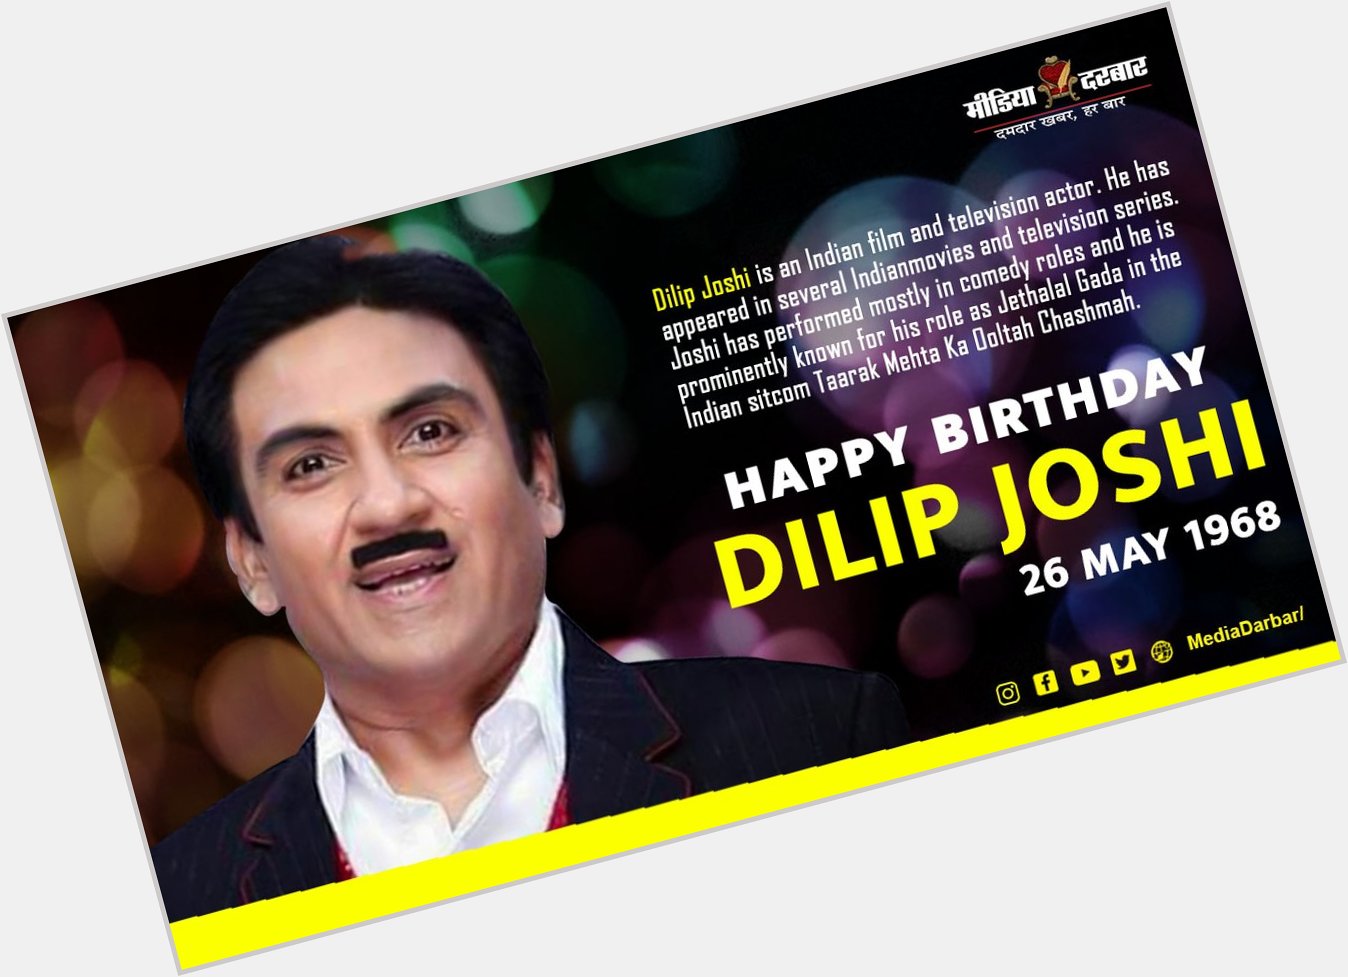 Wishing Happy Birthday To Dilip Joshi.   